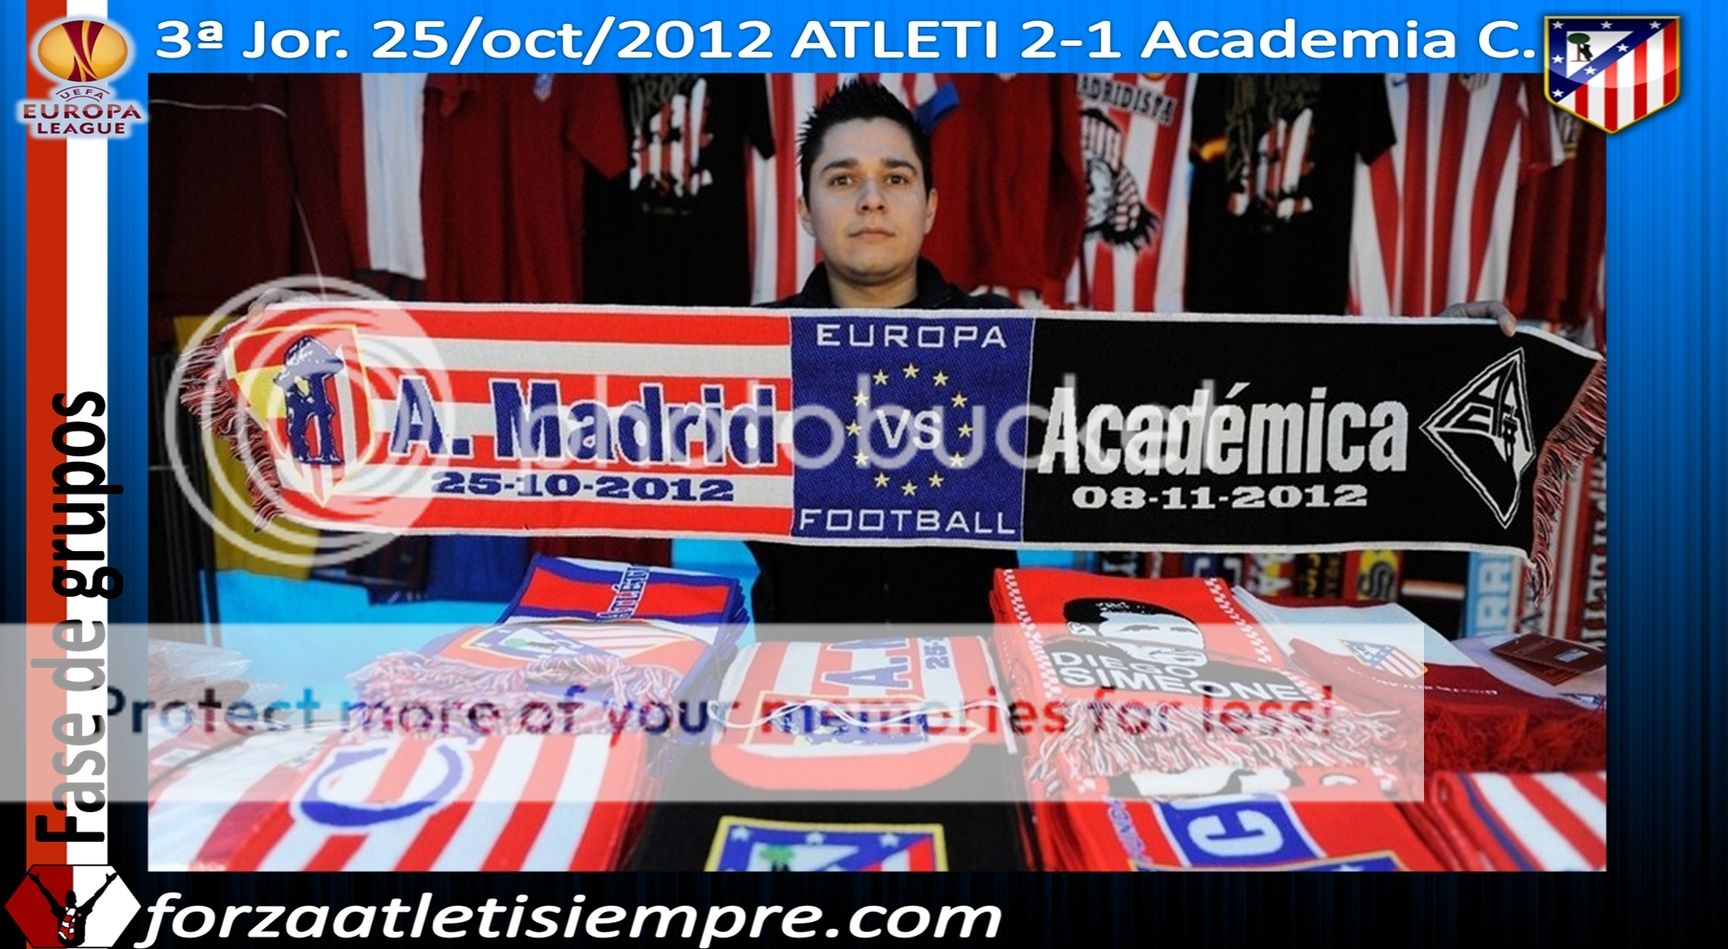 3ª Jor. UEFA E.L. 2012/13 ATLÉTI 2 - ACADÉMICA 1 - Los suplentes mantienen  002aCopiar-1